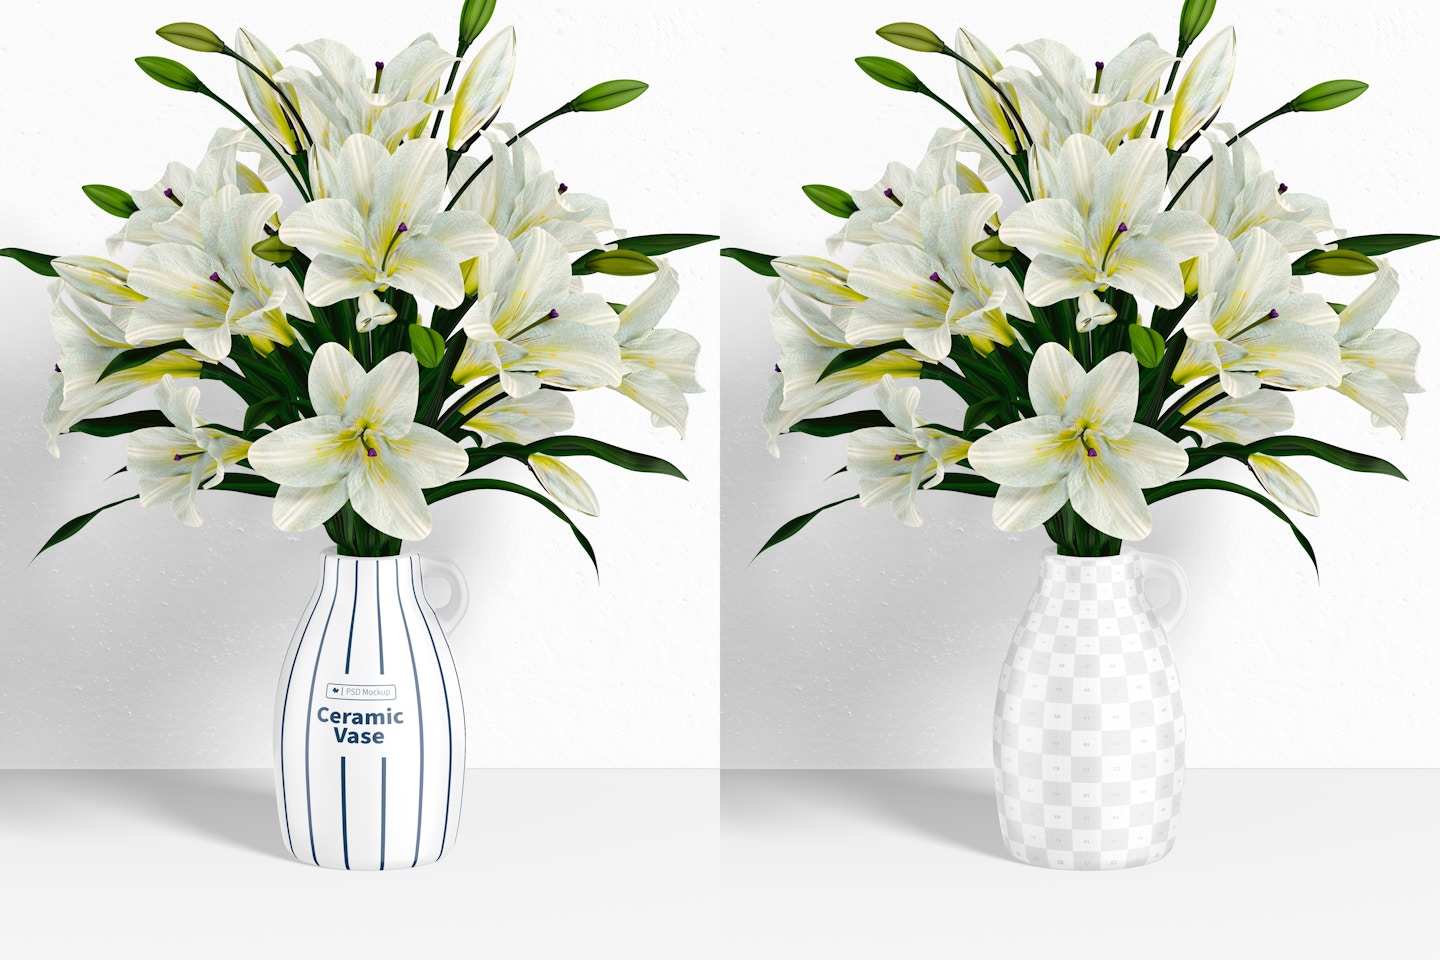 Ceramic Vase Mockup, with Flowers